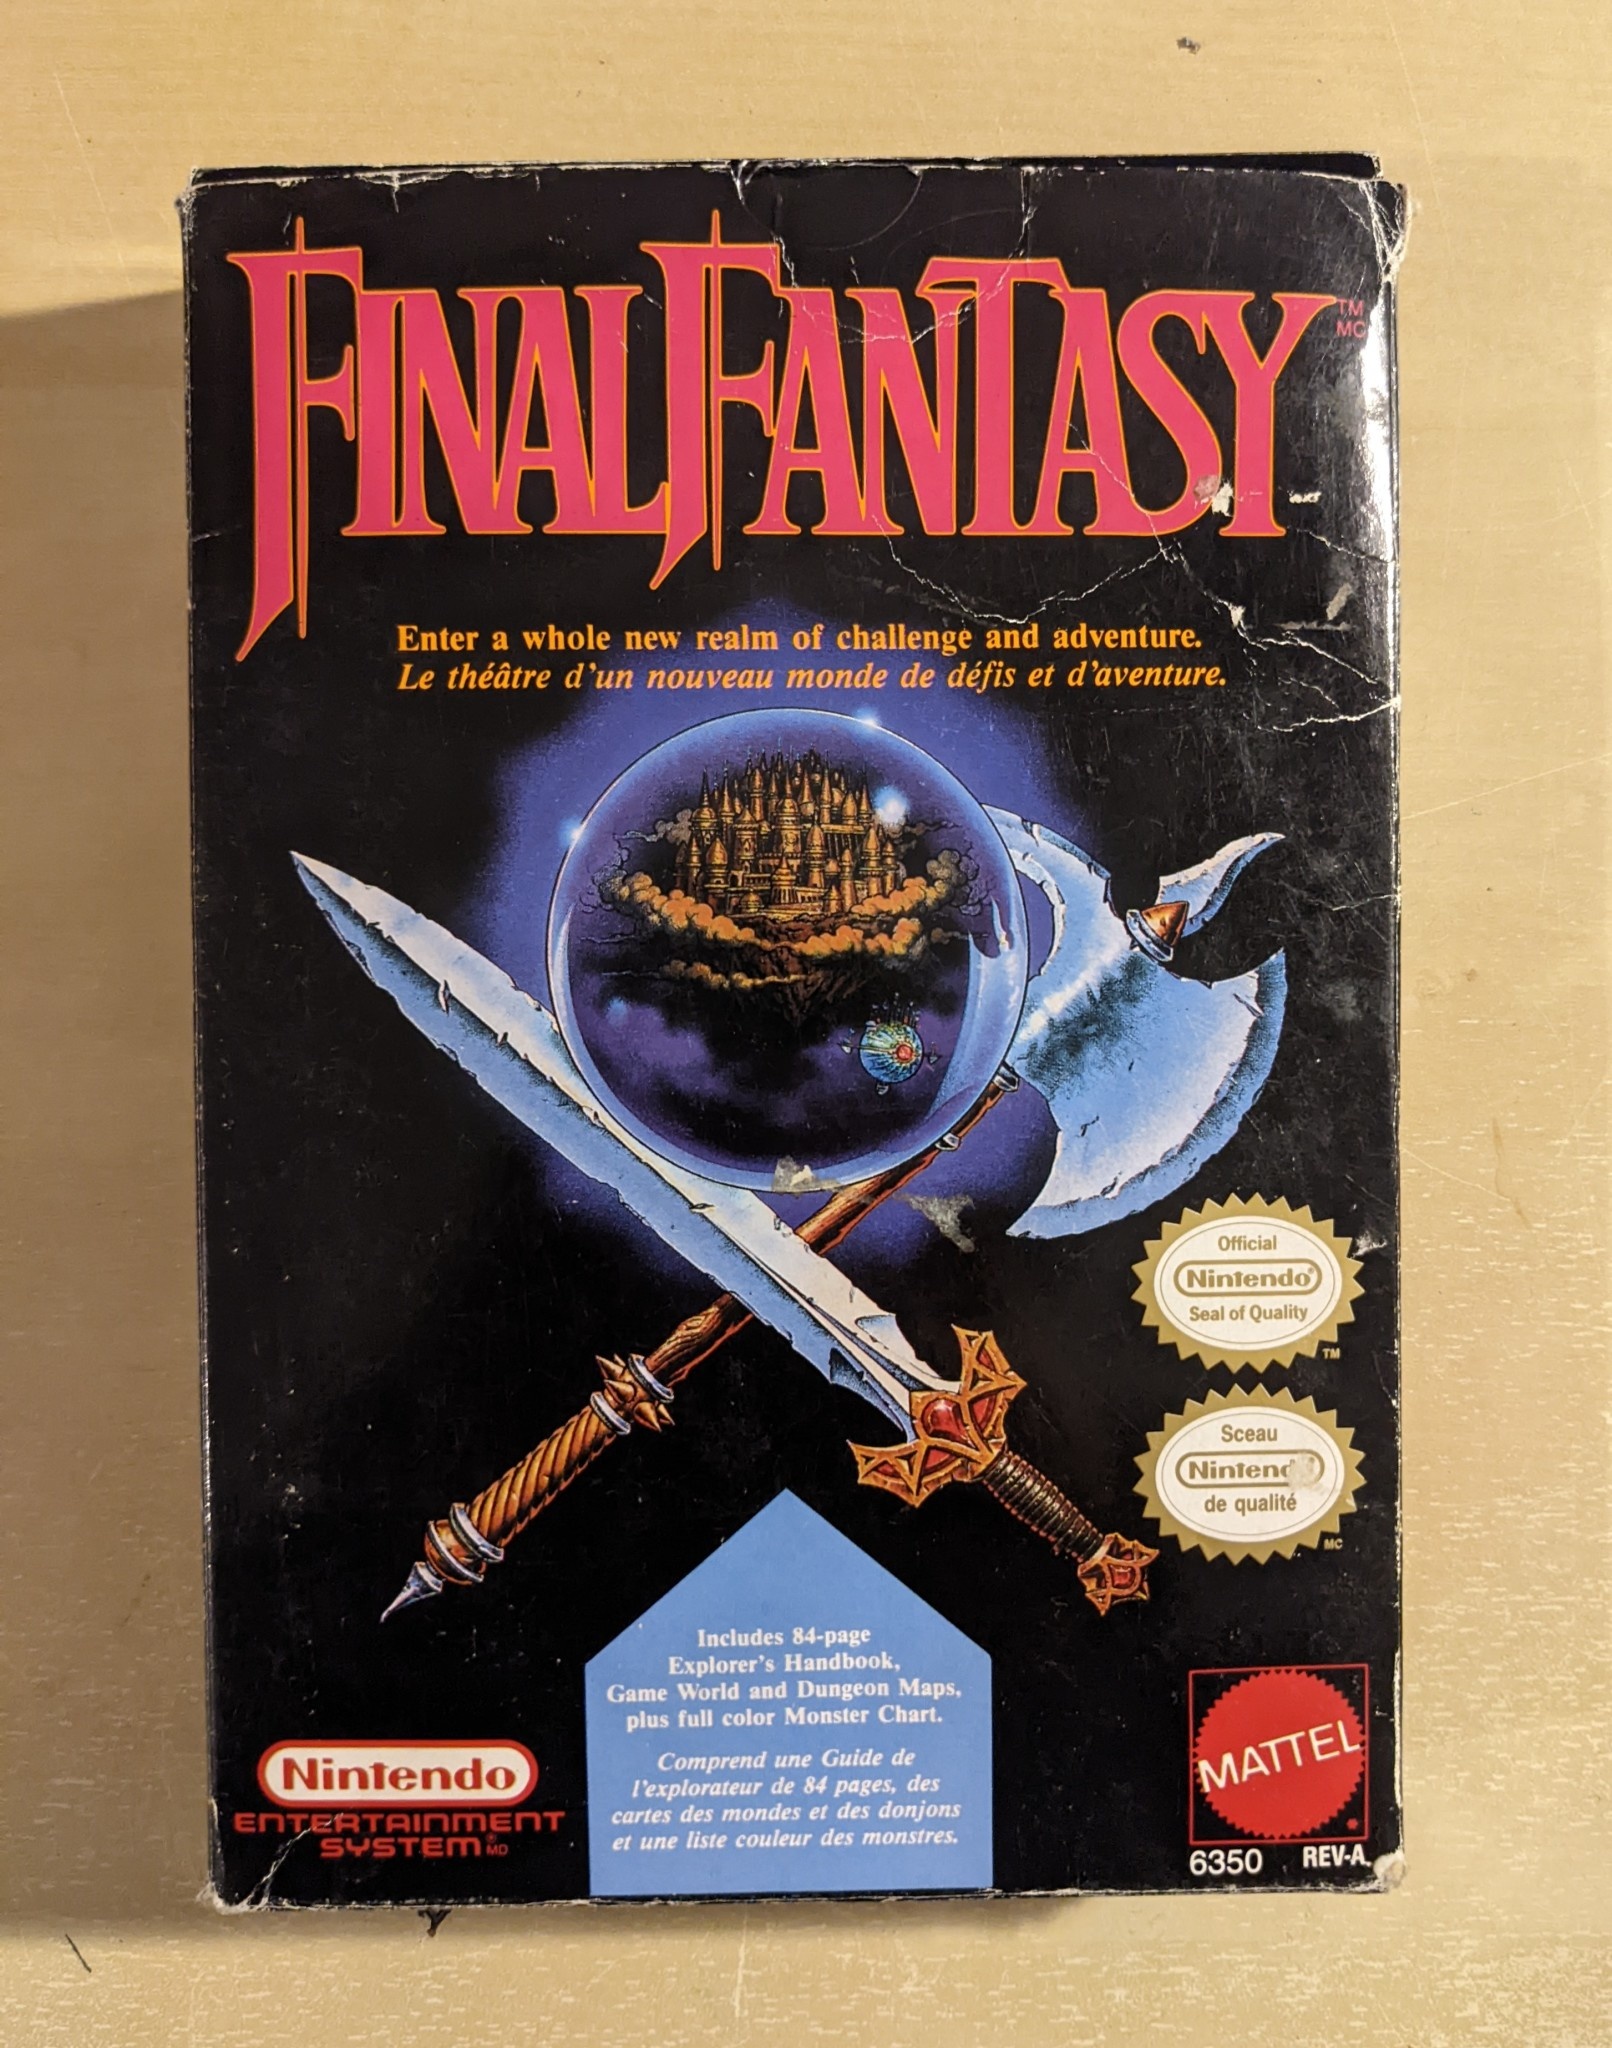 Used Game - NES - Final Fantasy [CIB]